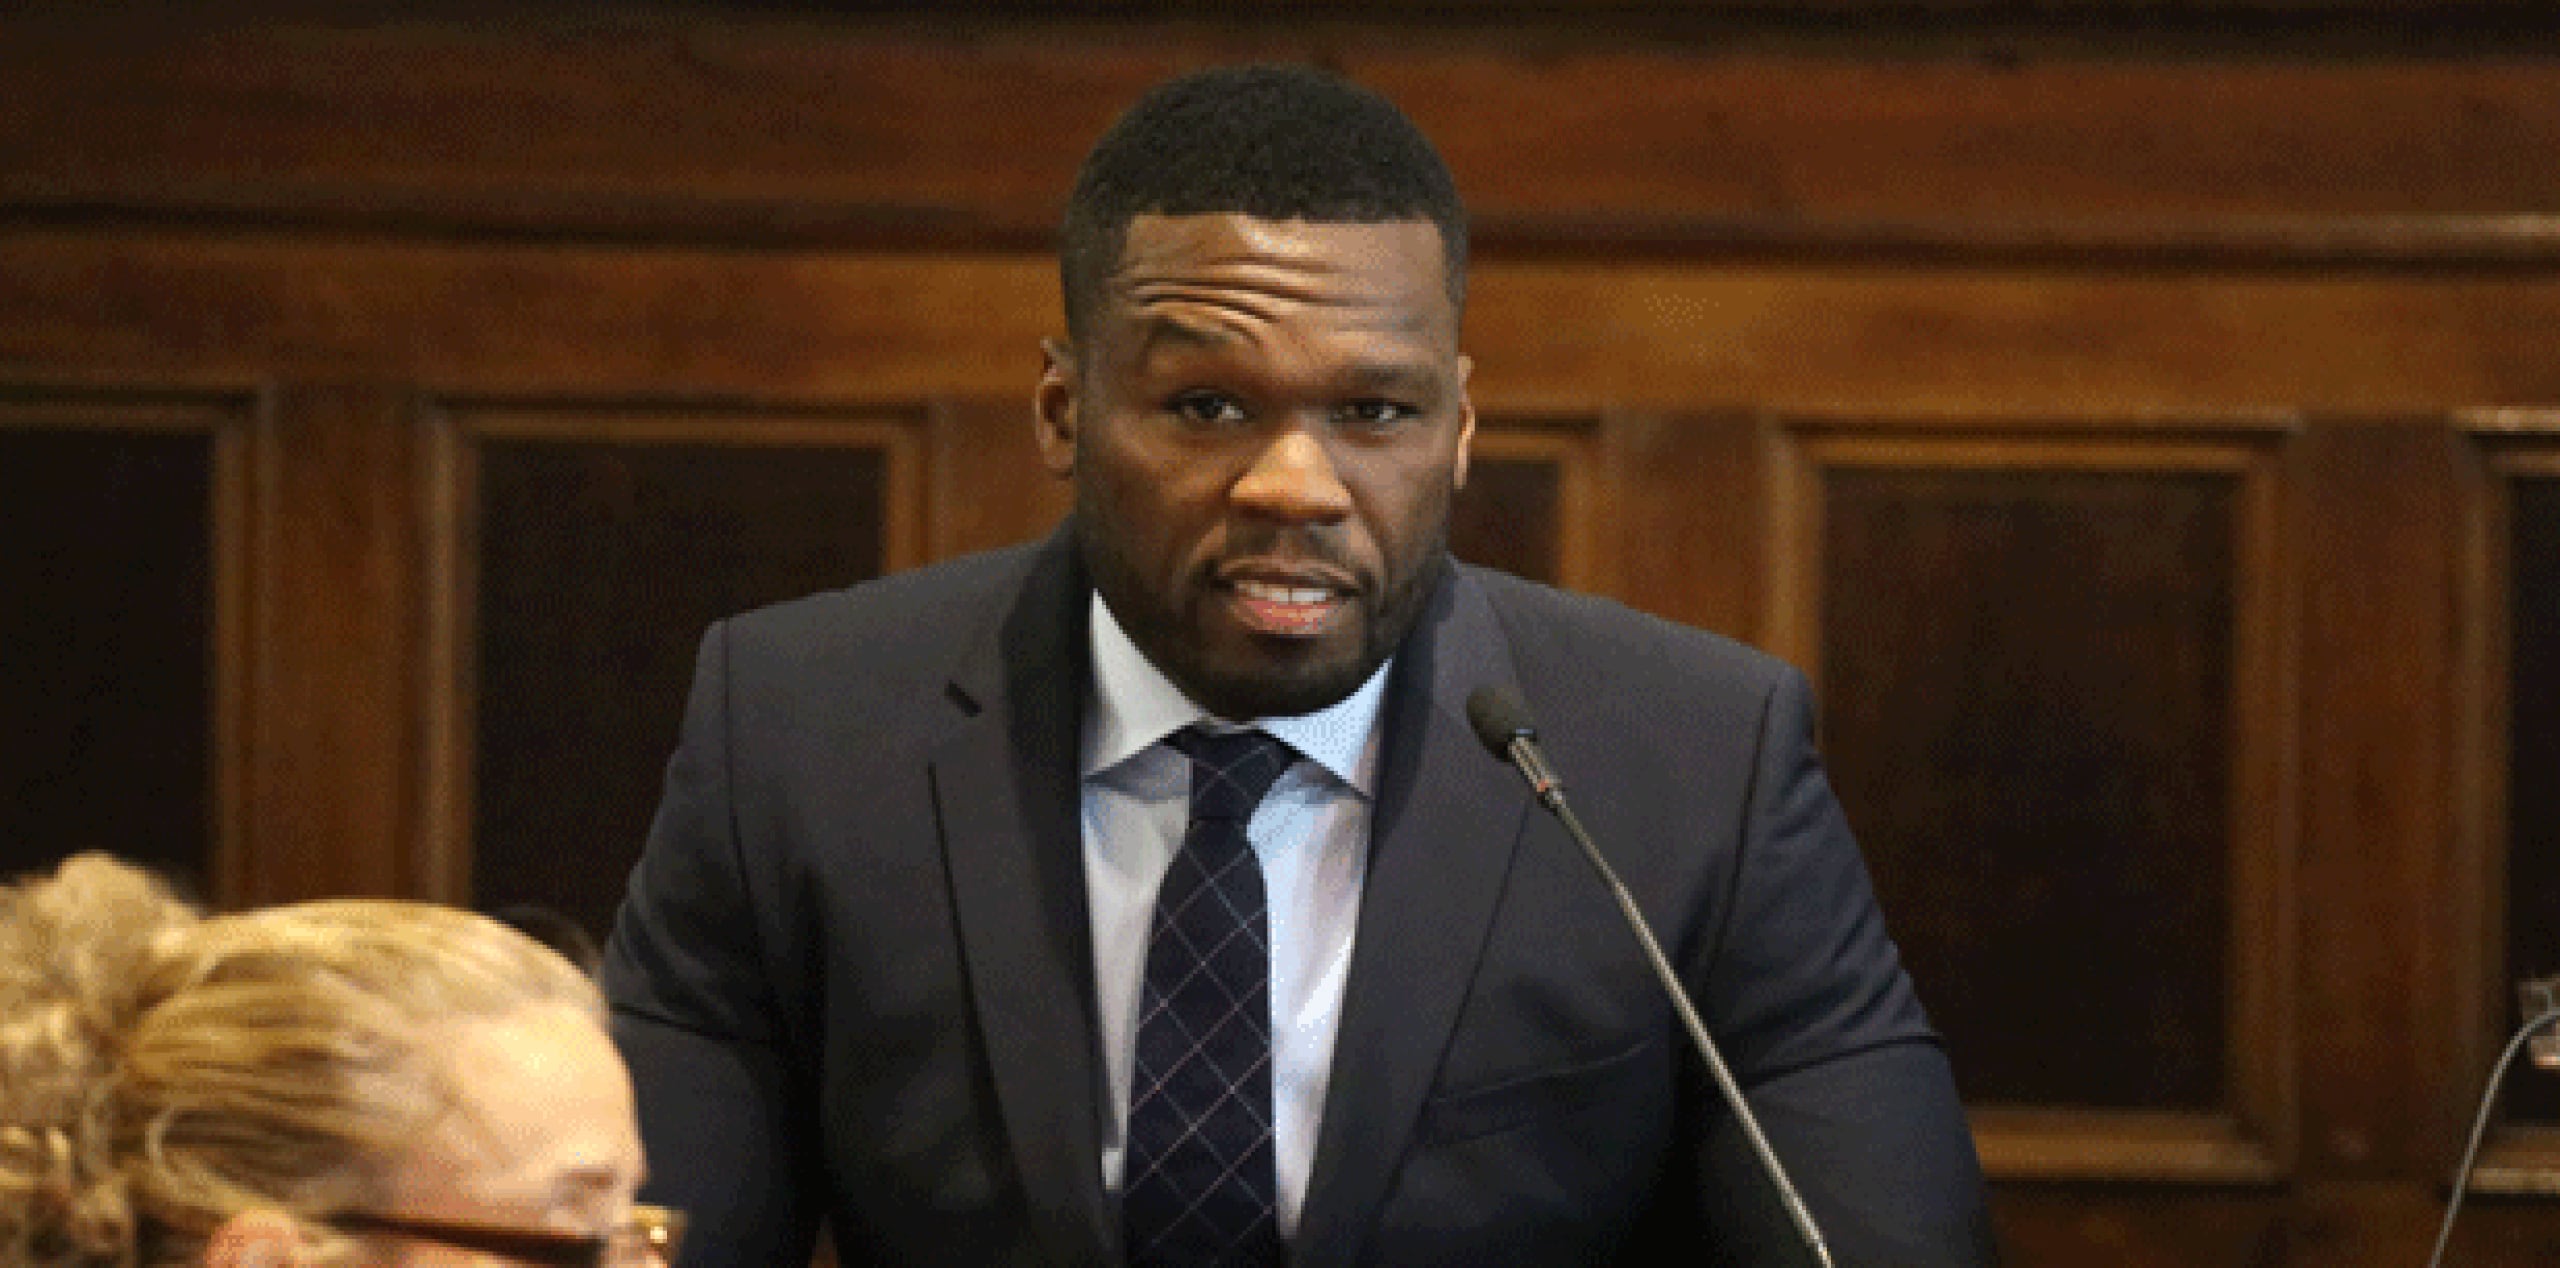 50 Cent, cuyo verdadero nombre es Curtis Jackson III, presentó una solicitud de protección por bancarrota en Connecticut luego del fallo. (Jefferson Siegel/New York Daily News/POOL)